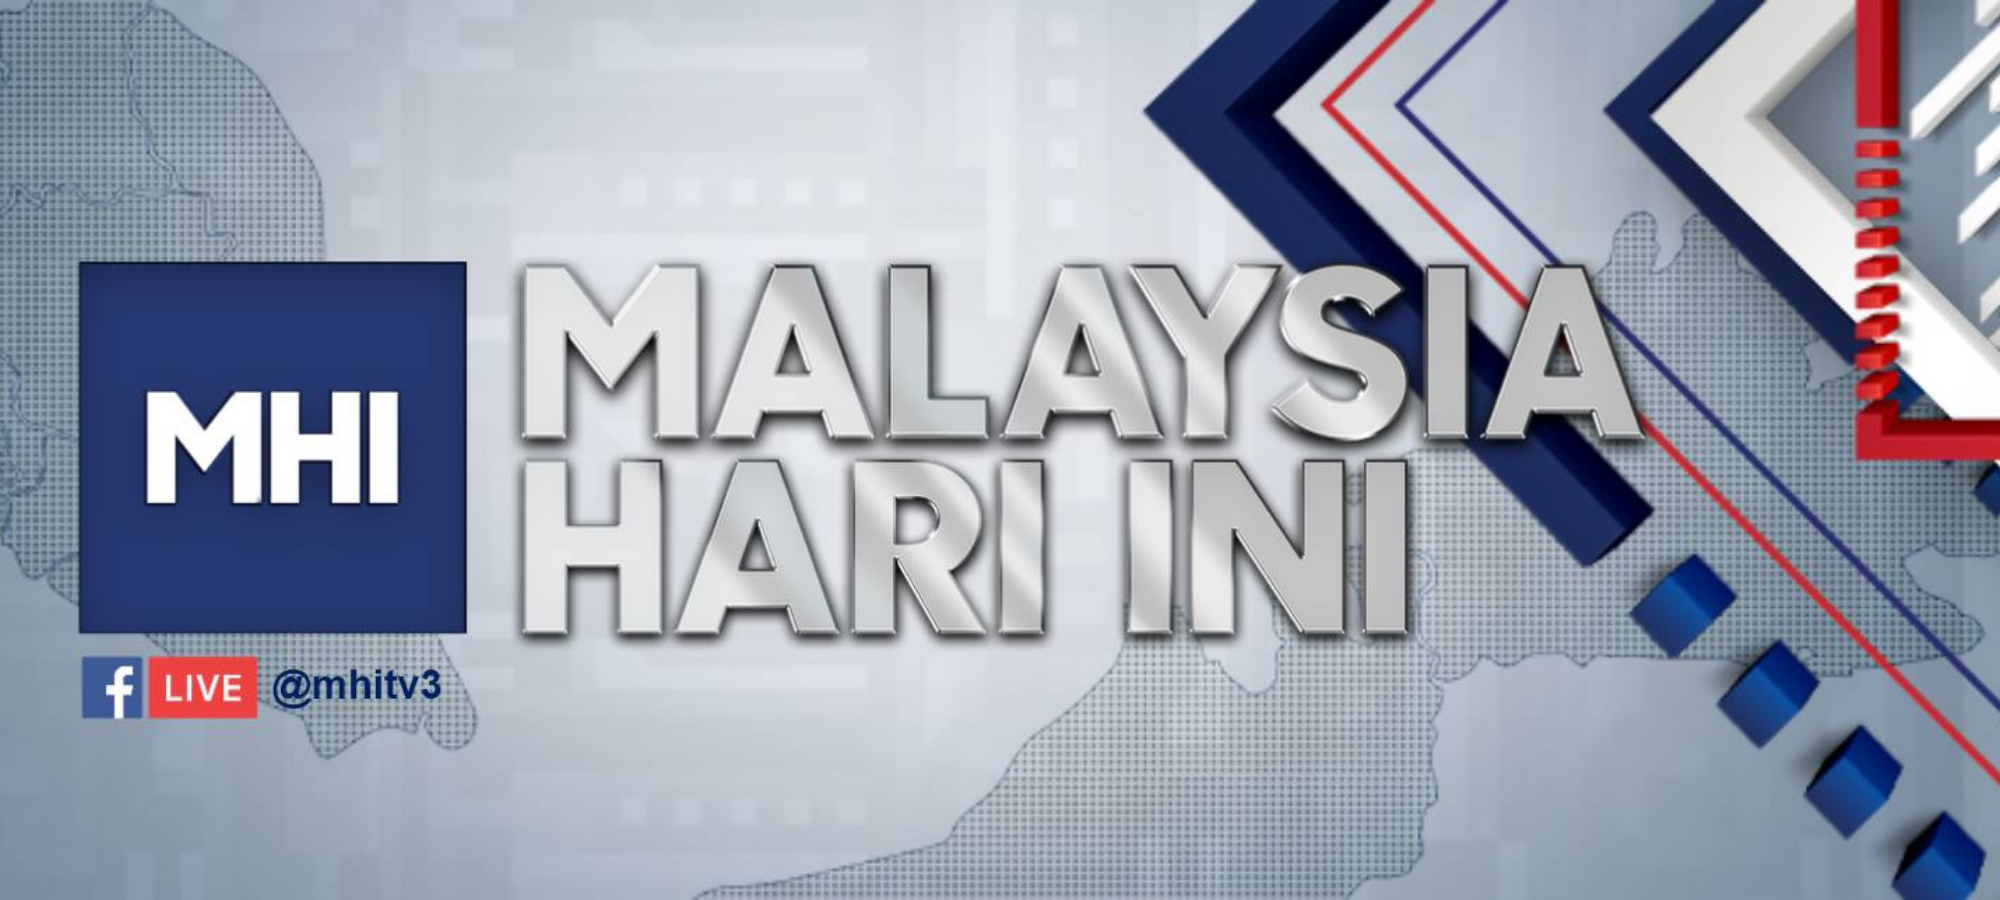 MalaysiaHariIni1